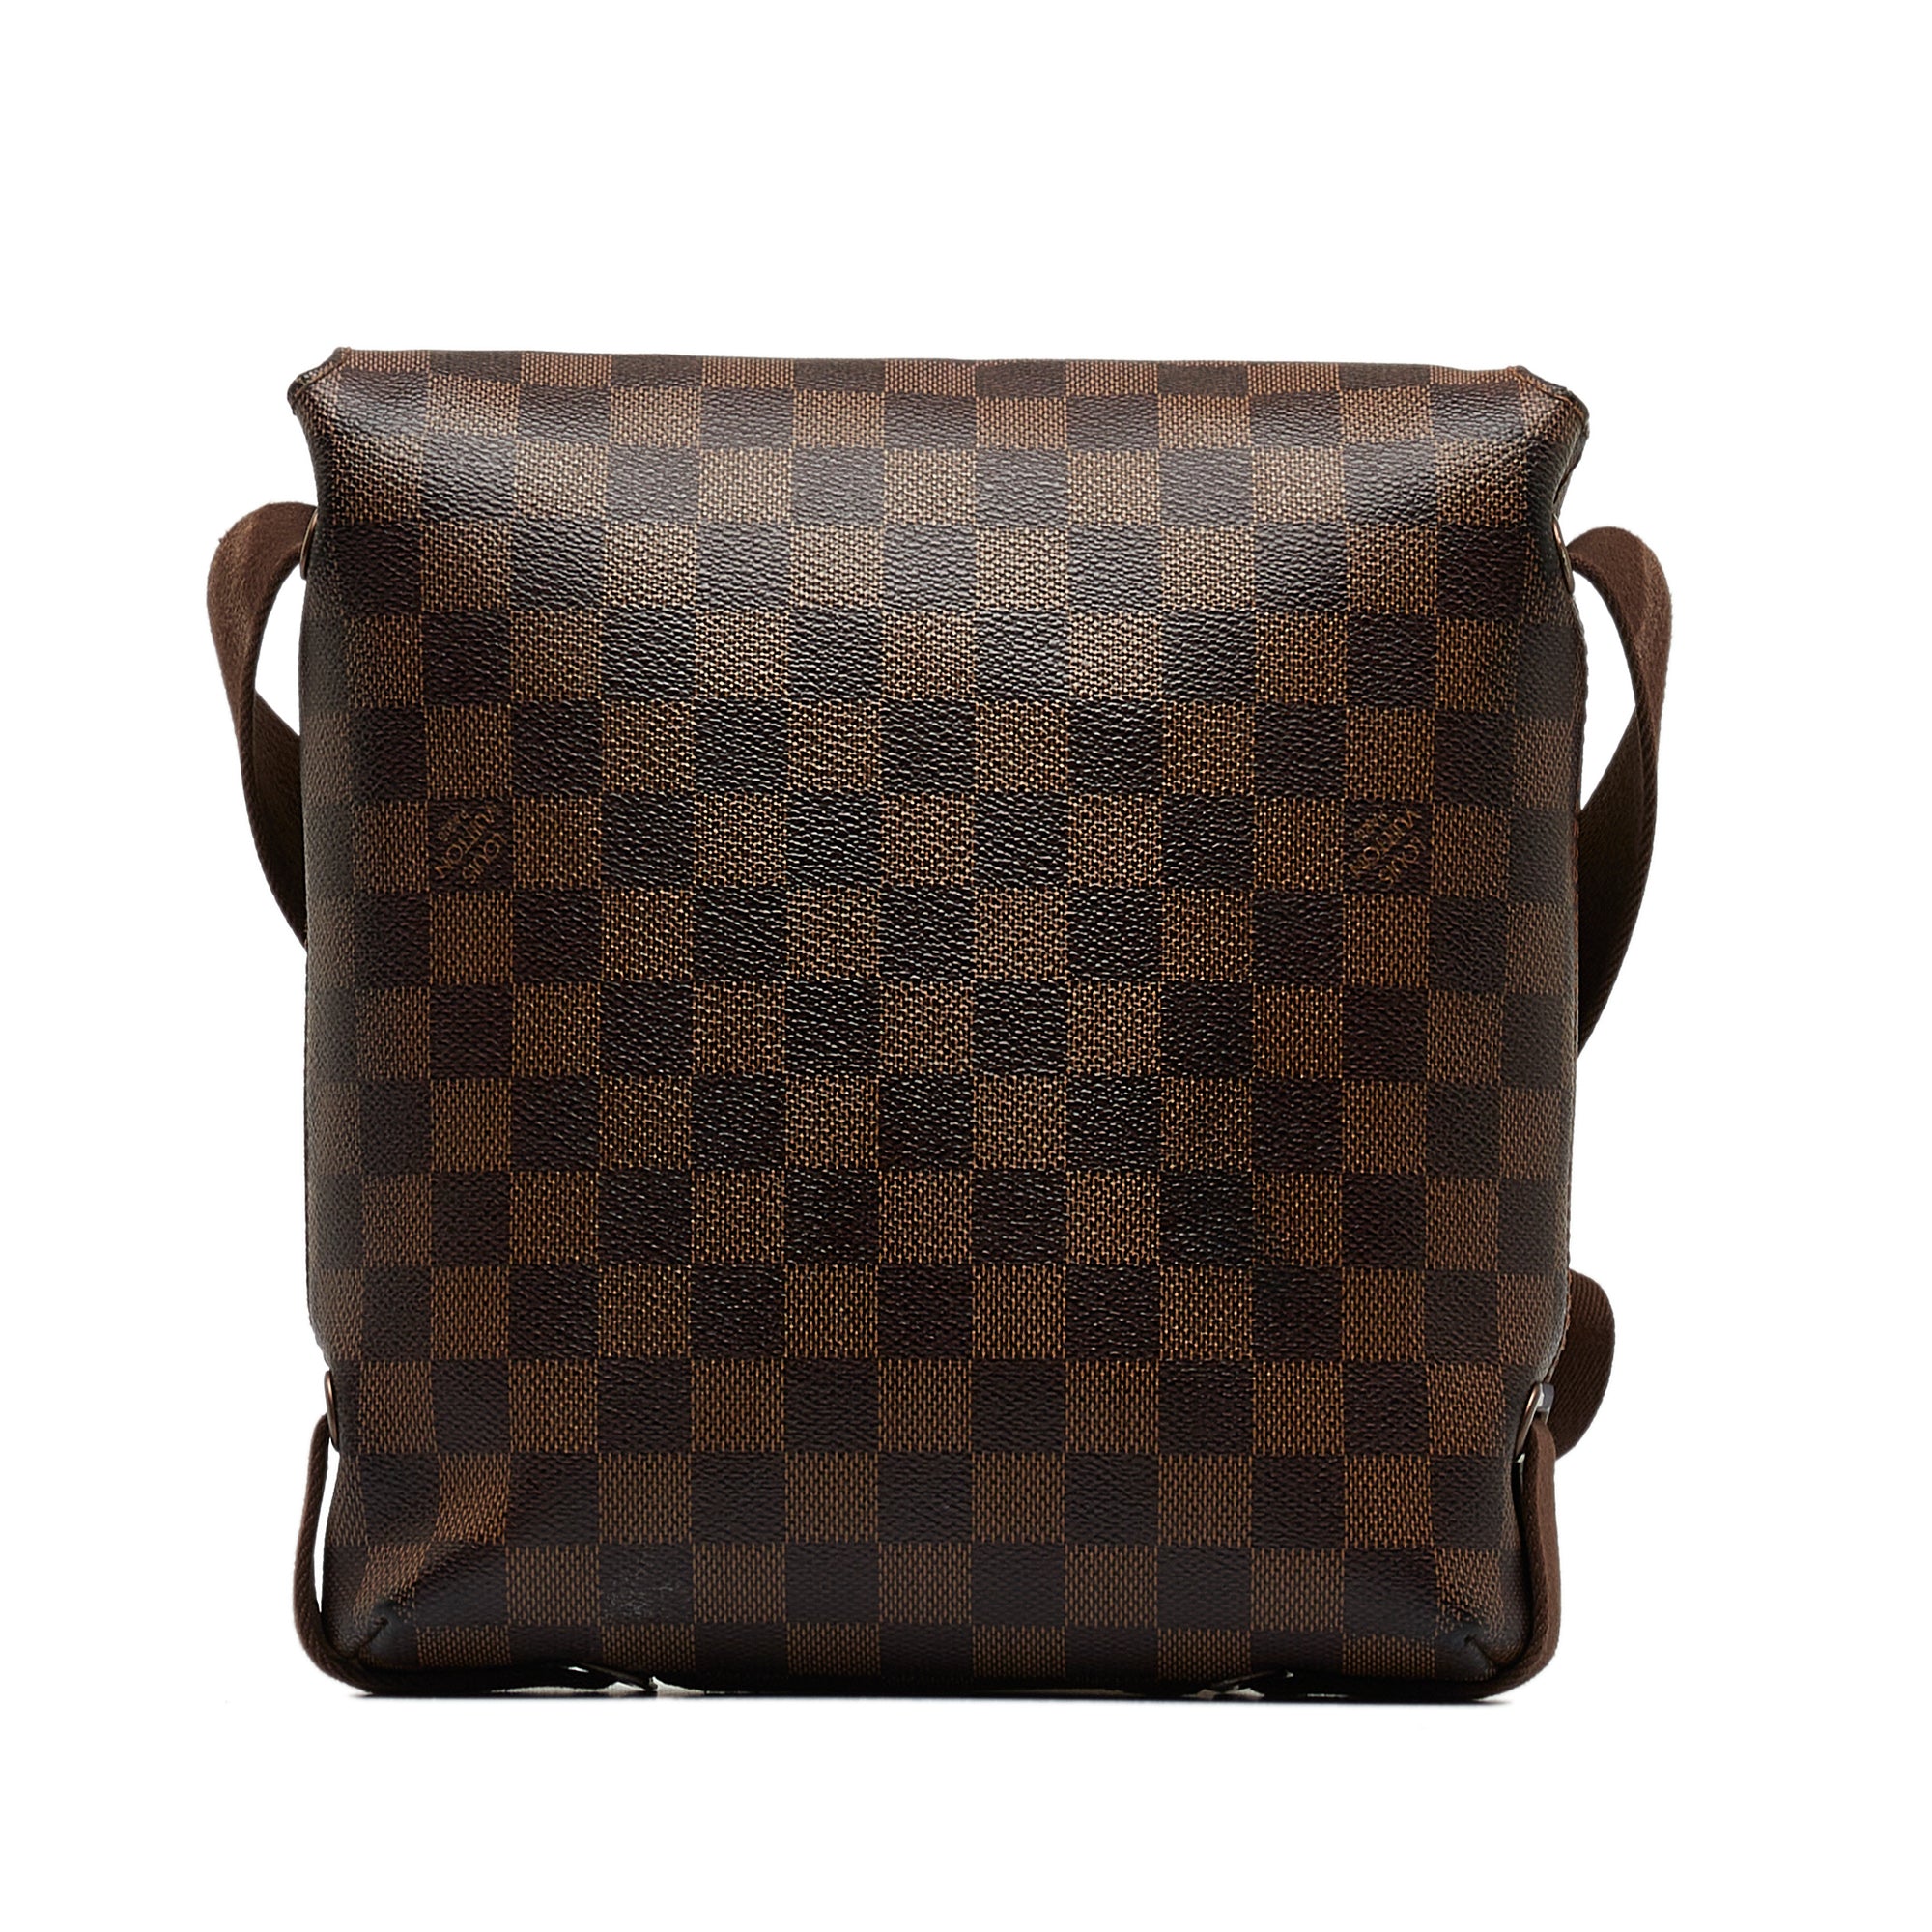 Louis Vuitton Naviglio Shoulder Bag in Ebene Damier Canvas and Brown